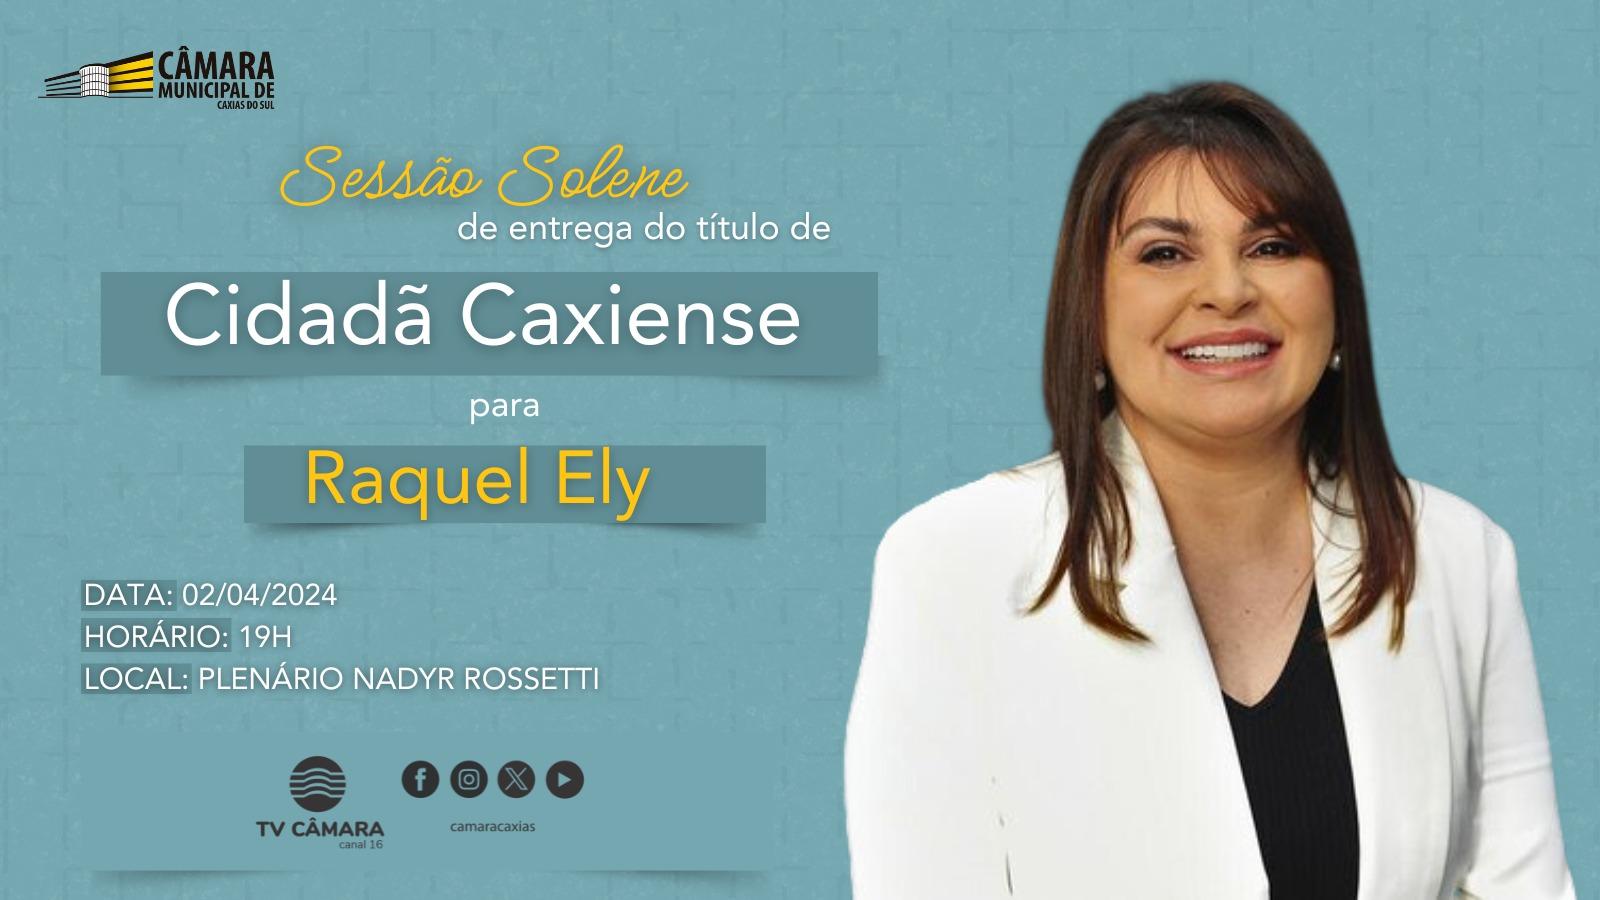 Professora Raquel Ely será Cidadã Caxiense nesta terça-feira